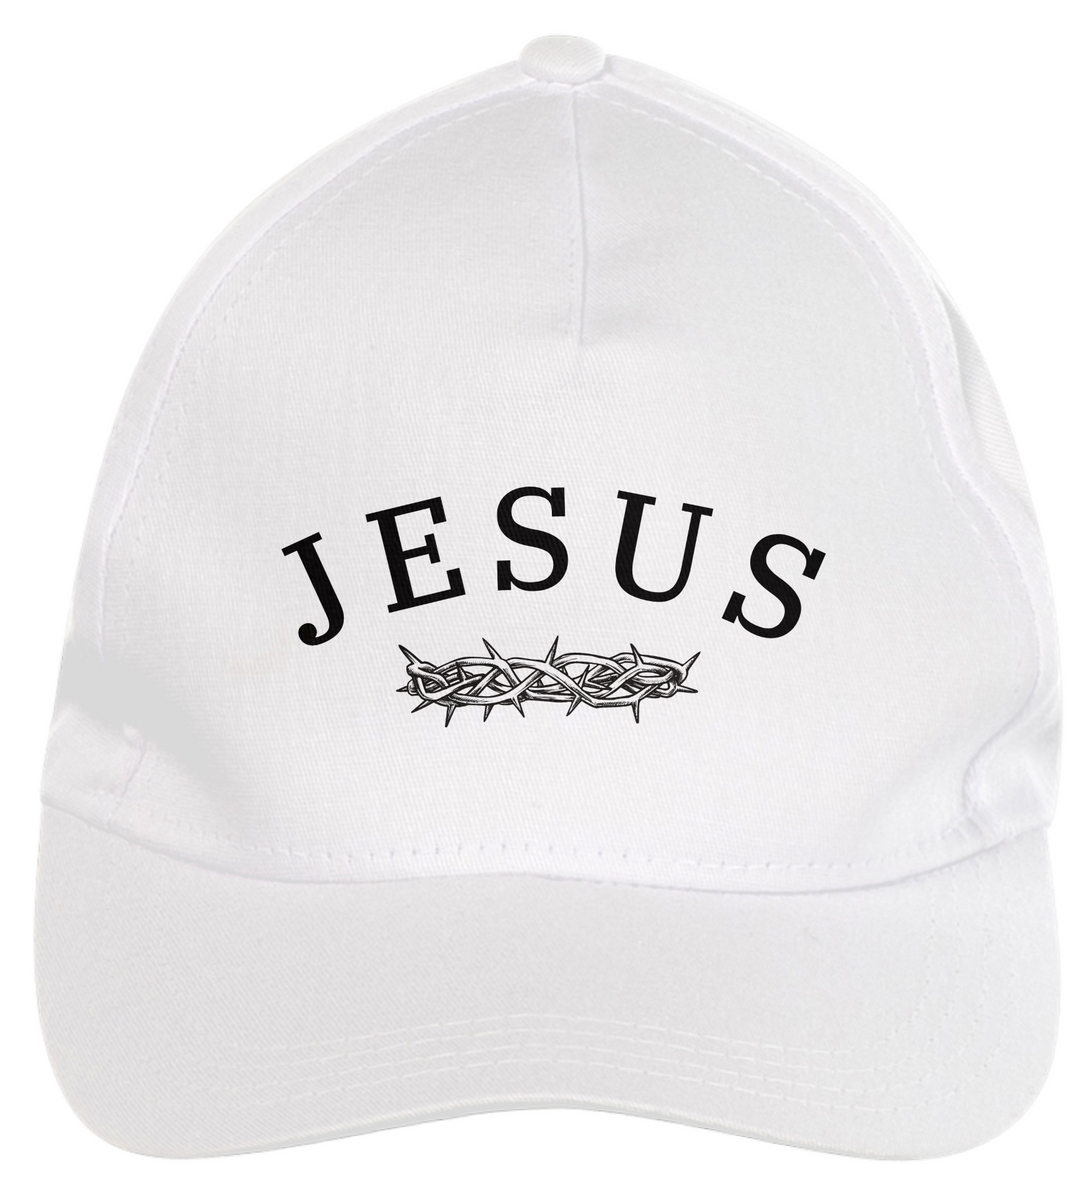 Nome do produto: Boné Jesus e coroa